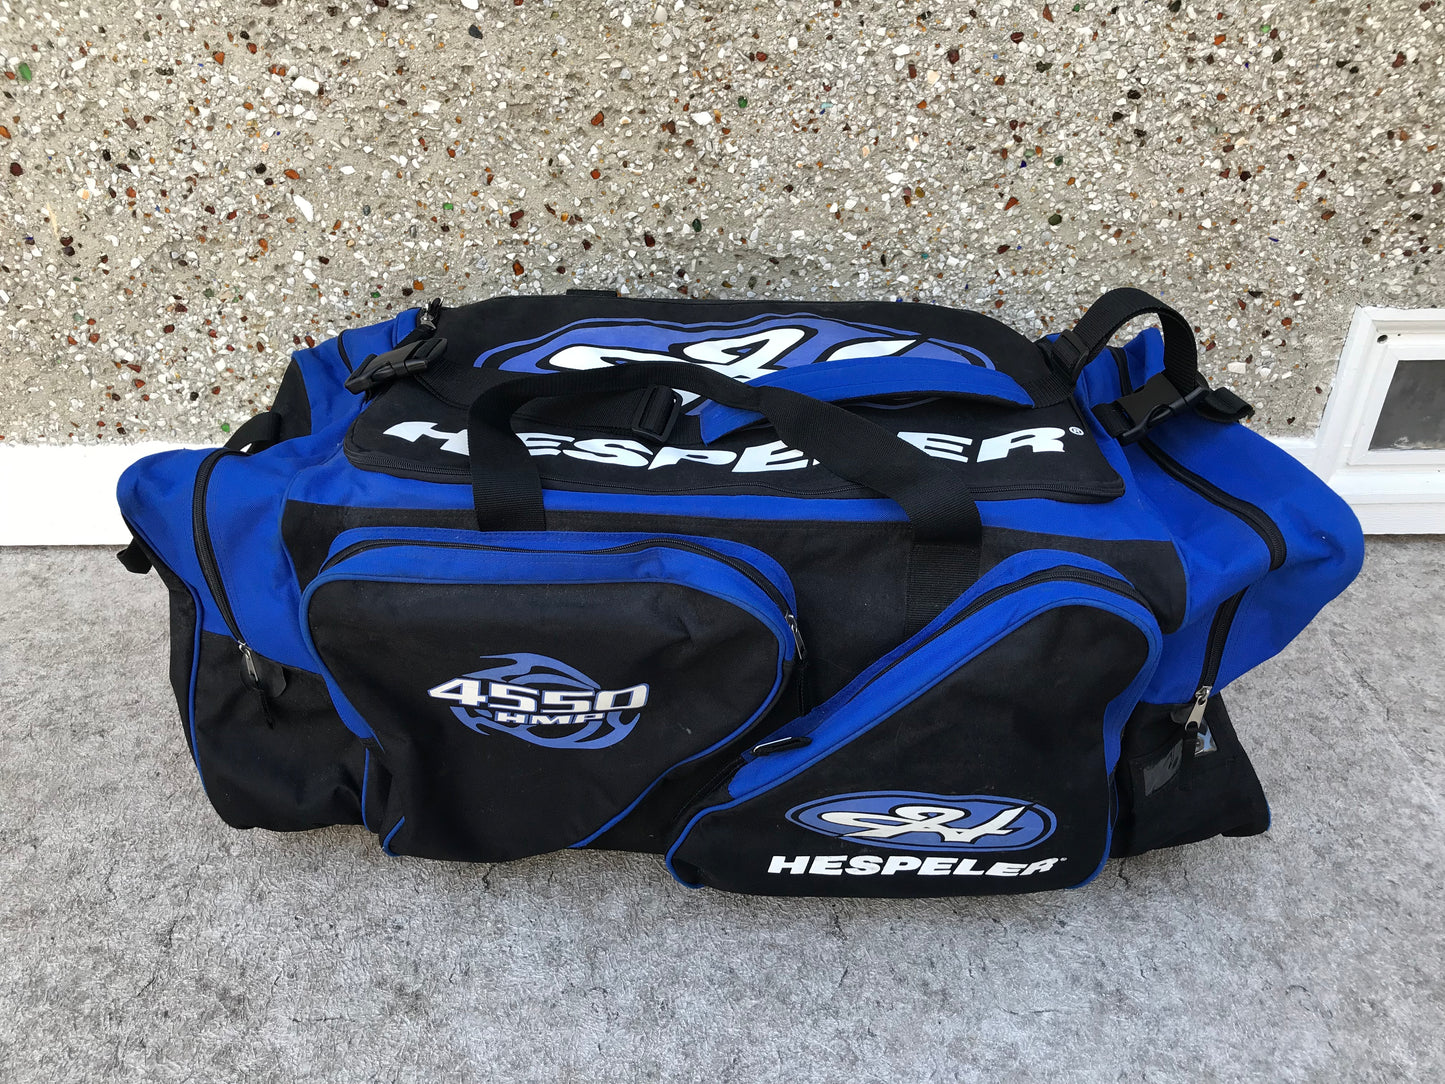 Hockey Bag Men's Senior Large Hespeler Bag Excellent Condition All Zippers Perfect Blue Black